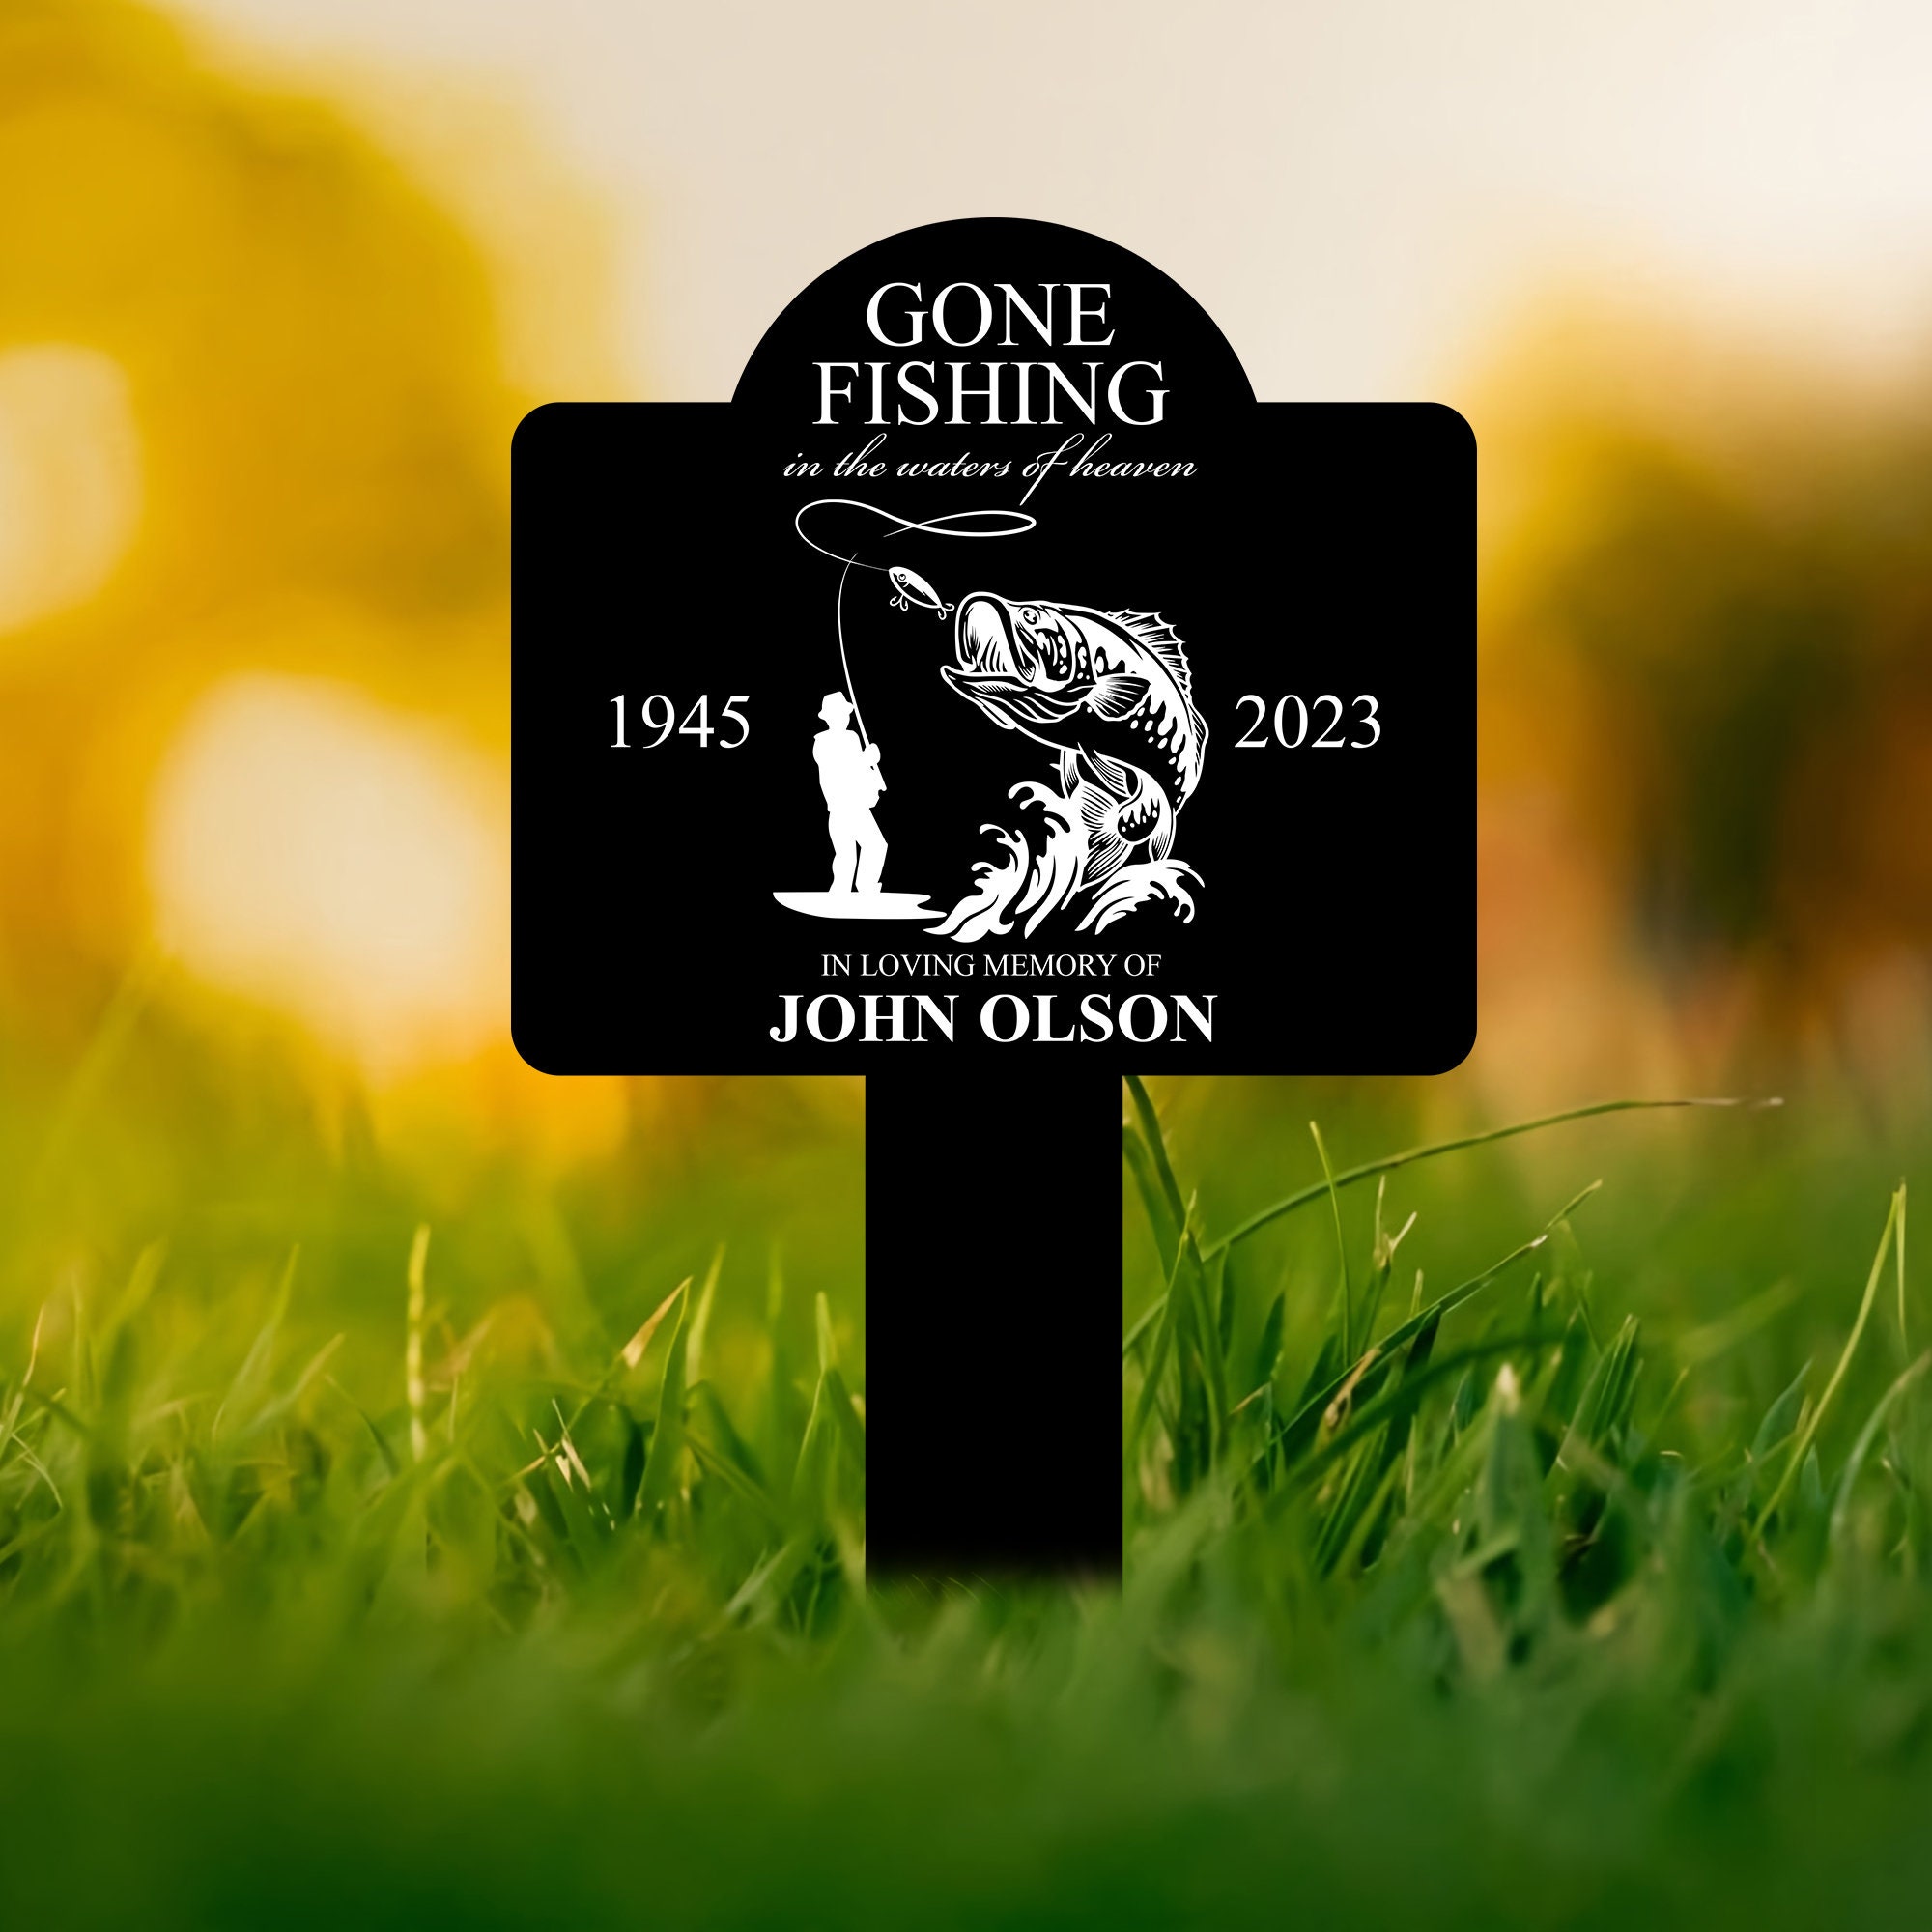 Custom Fishing Memorial Stake Acrylic, Black Bass Fishing Sign